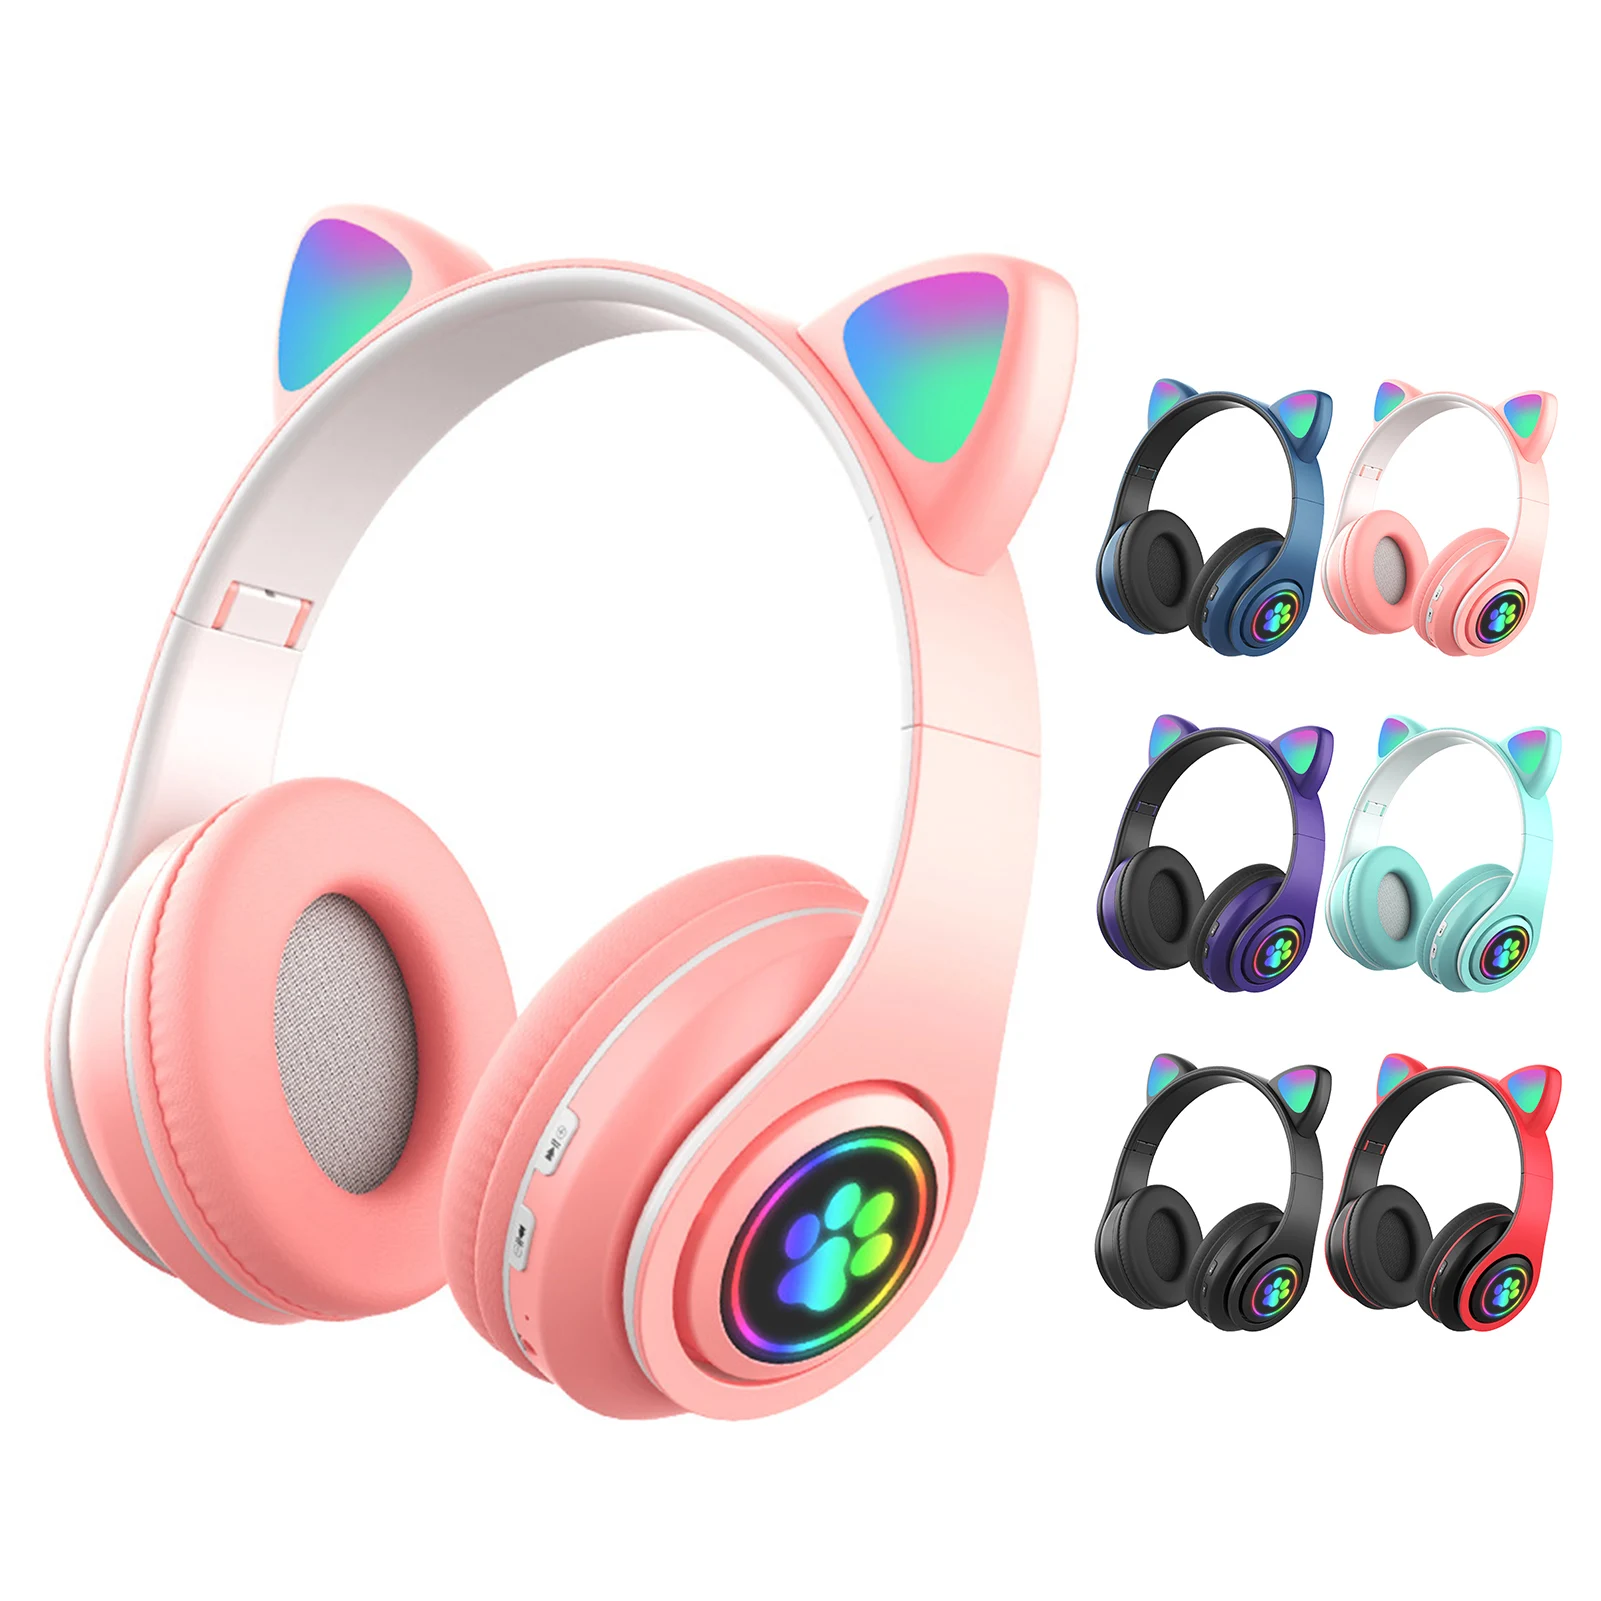 

Flash Light Cute Cat Ears Wireless Headphone With Mic Can Control LED Kid Girl Stereo Music Helmet Phone BT Headset Fashion Gift